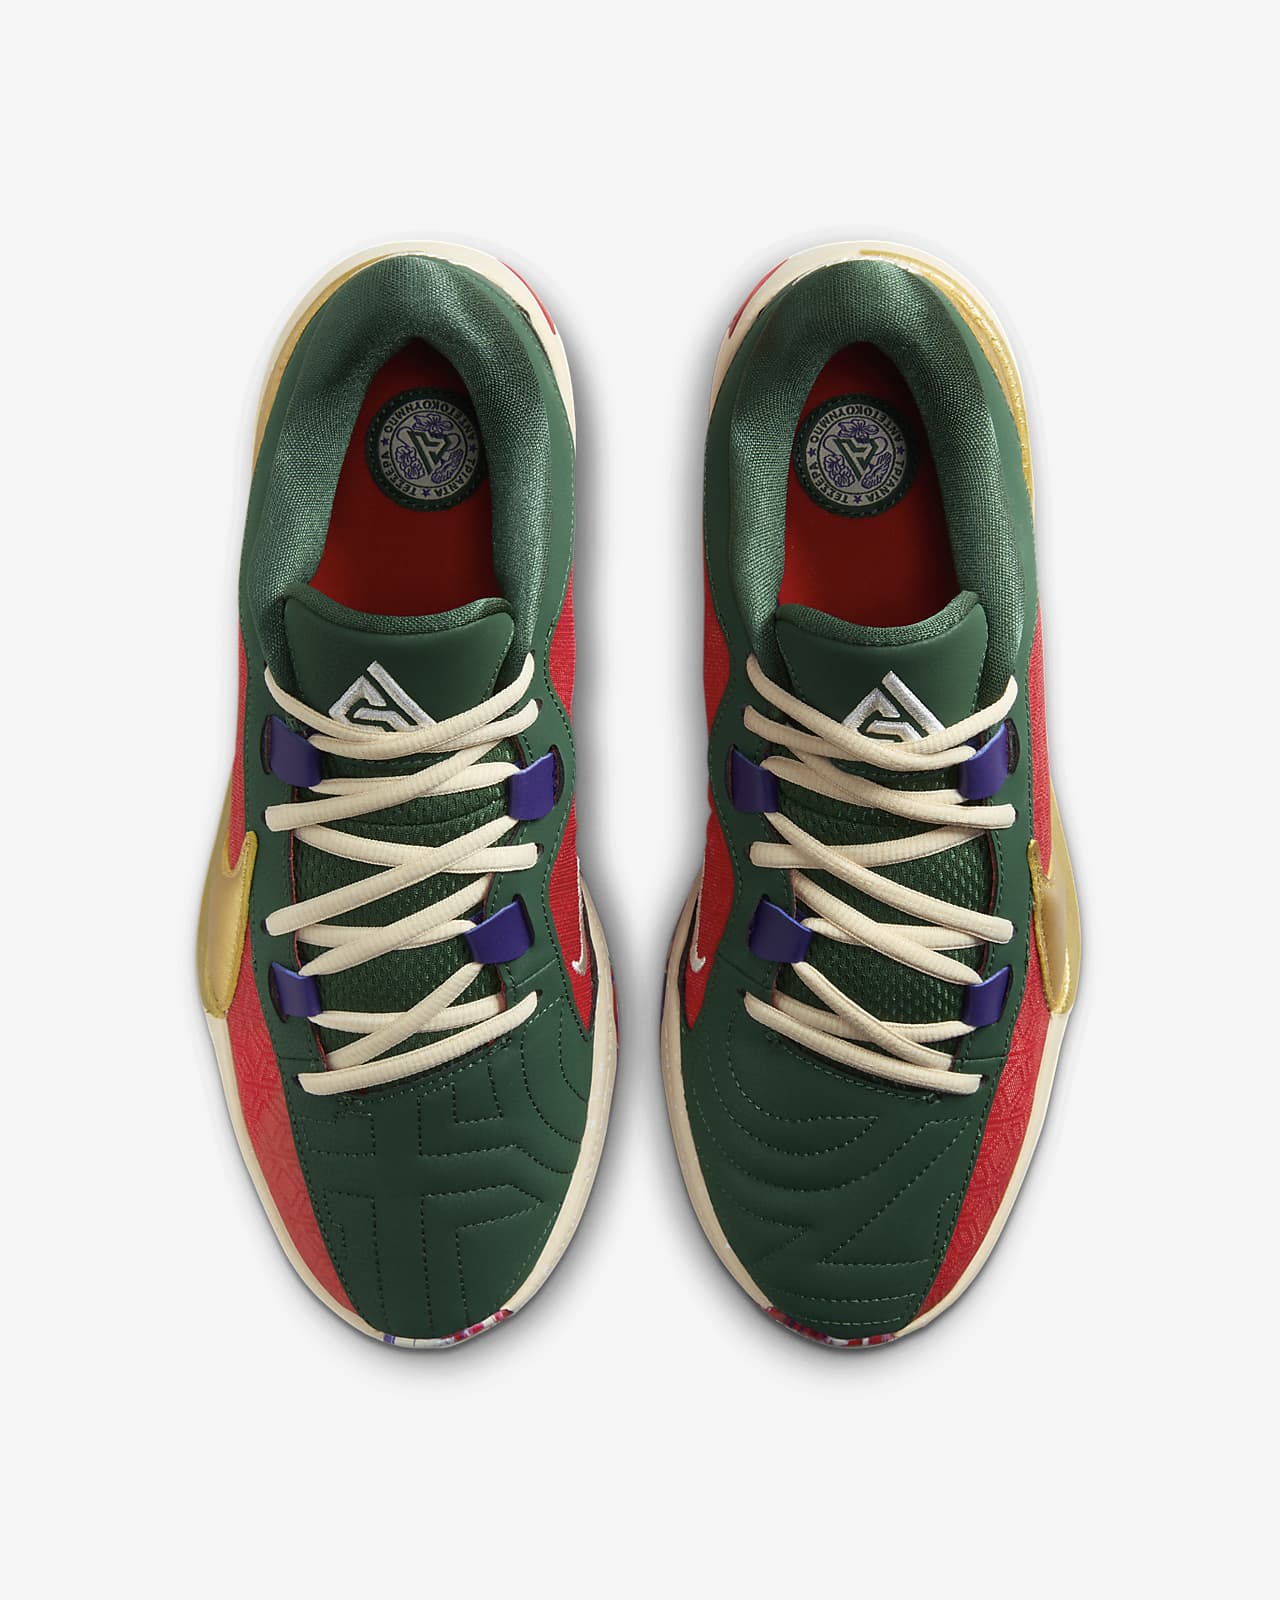 Freak 5 “Loyalty” Basketball Shoes. Nike.com